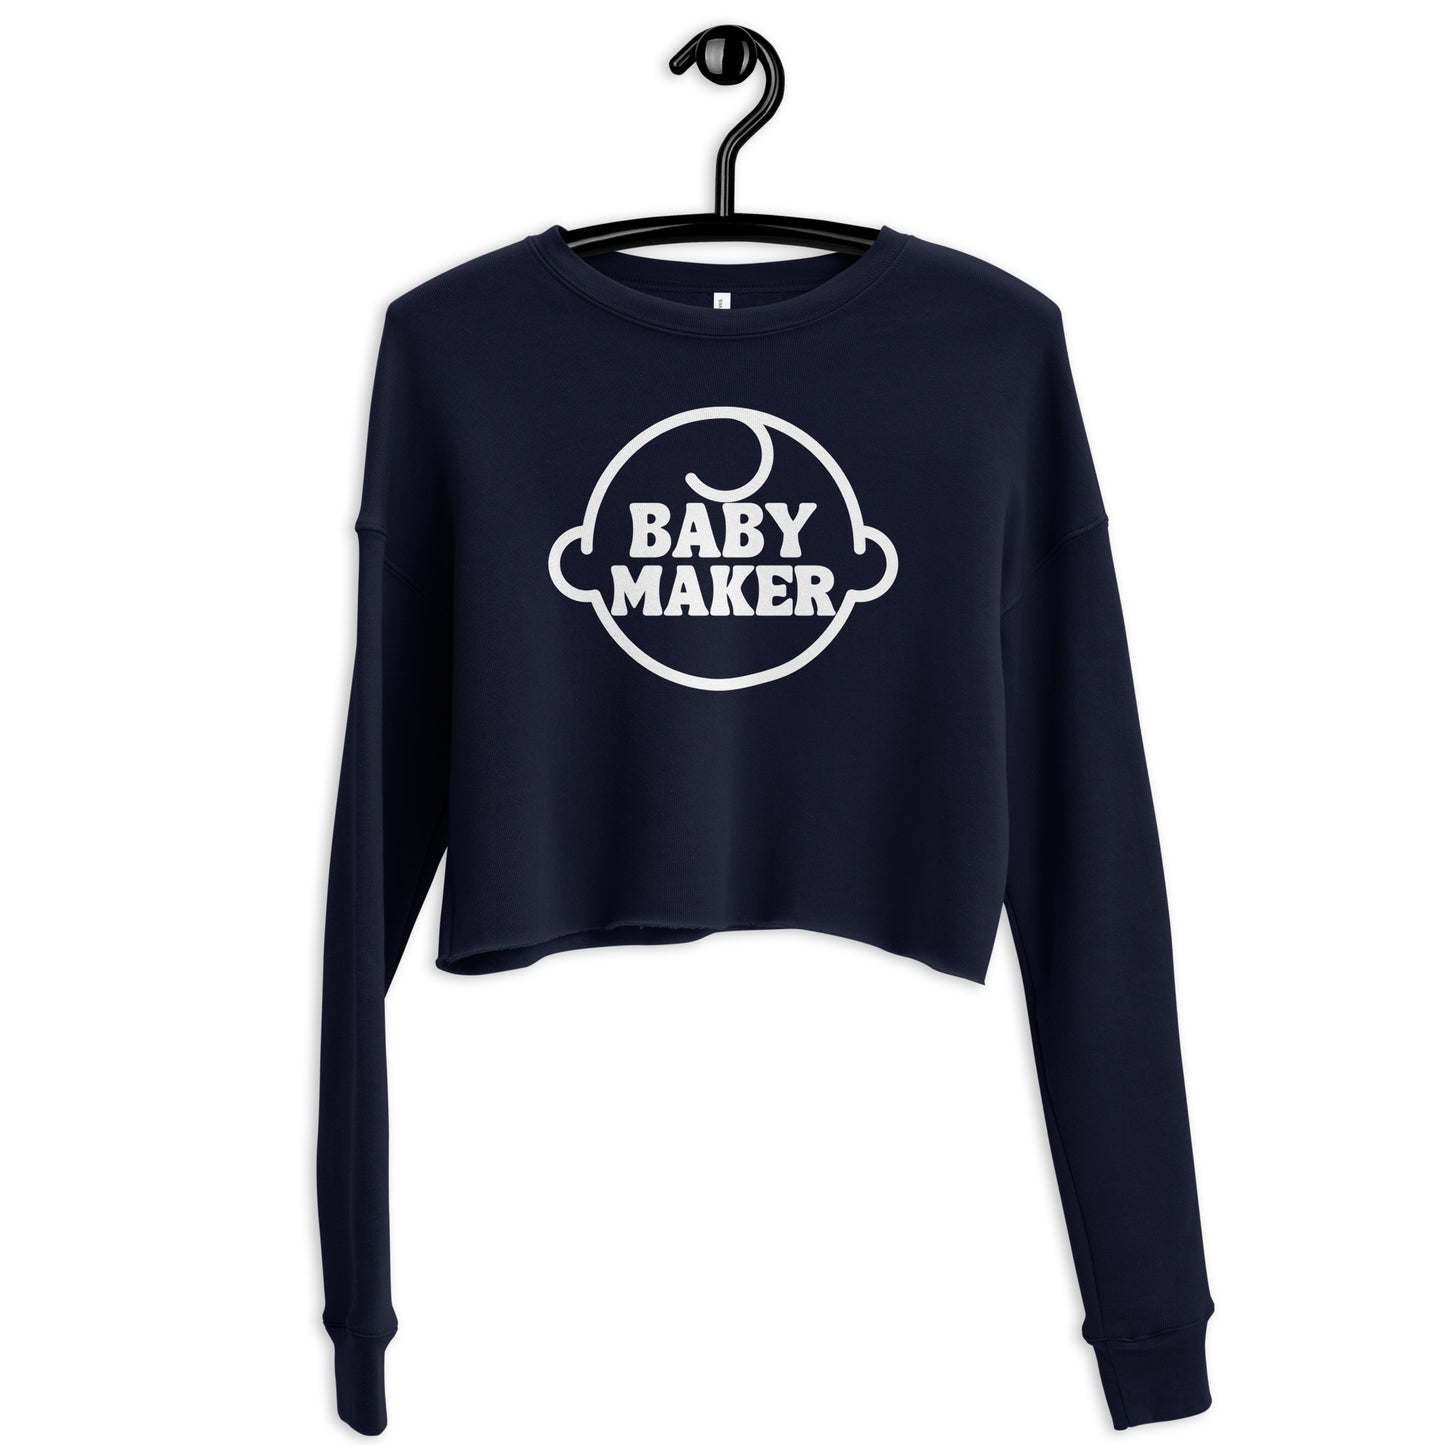 Baby Maker Cropped Sweatshirt in Navy